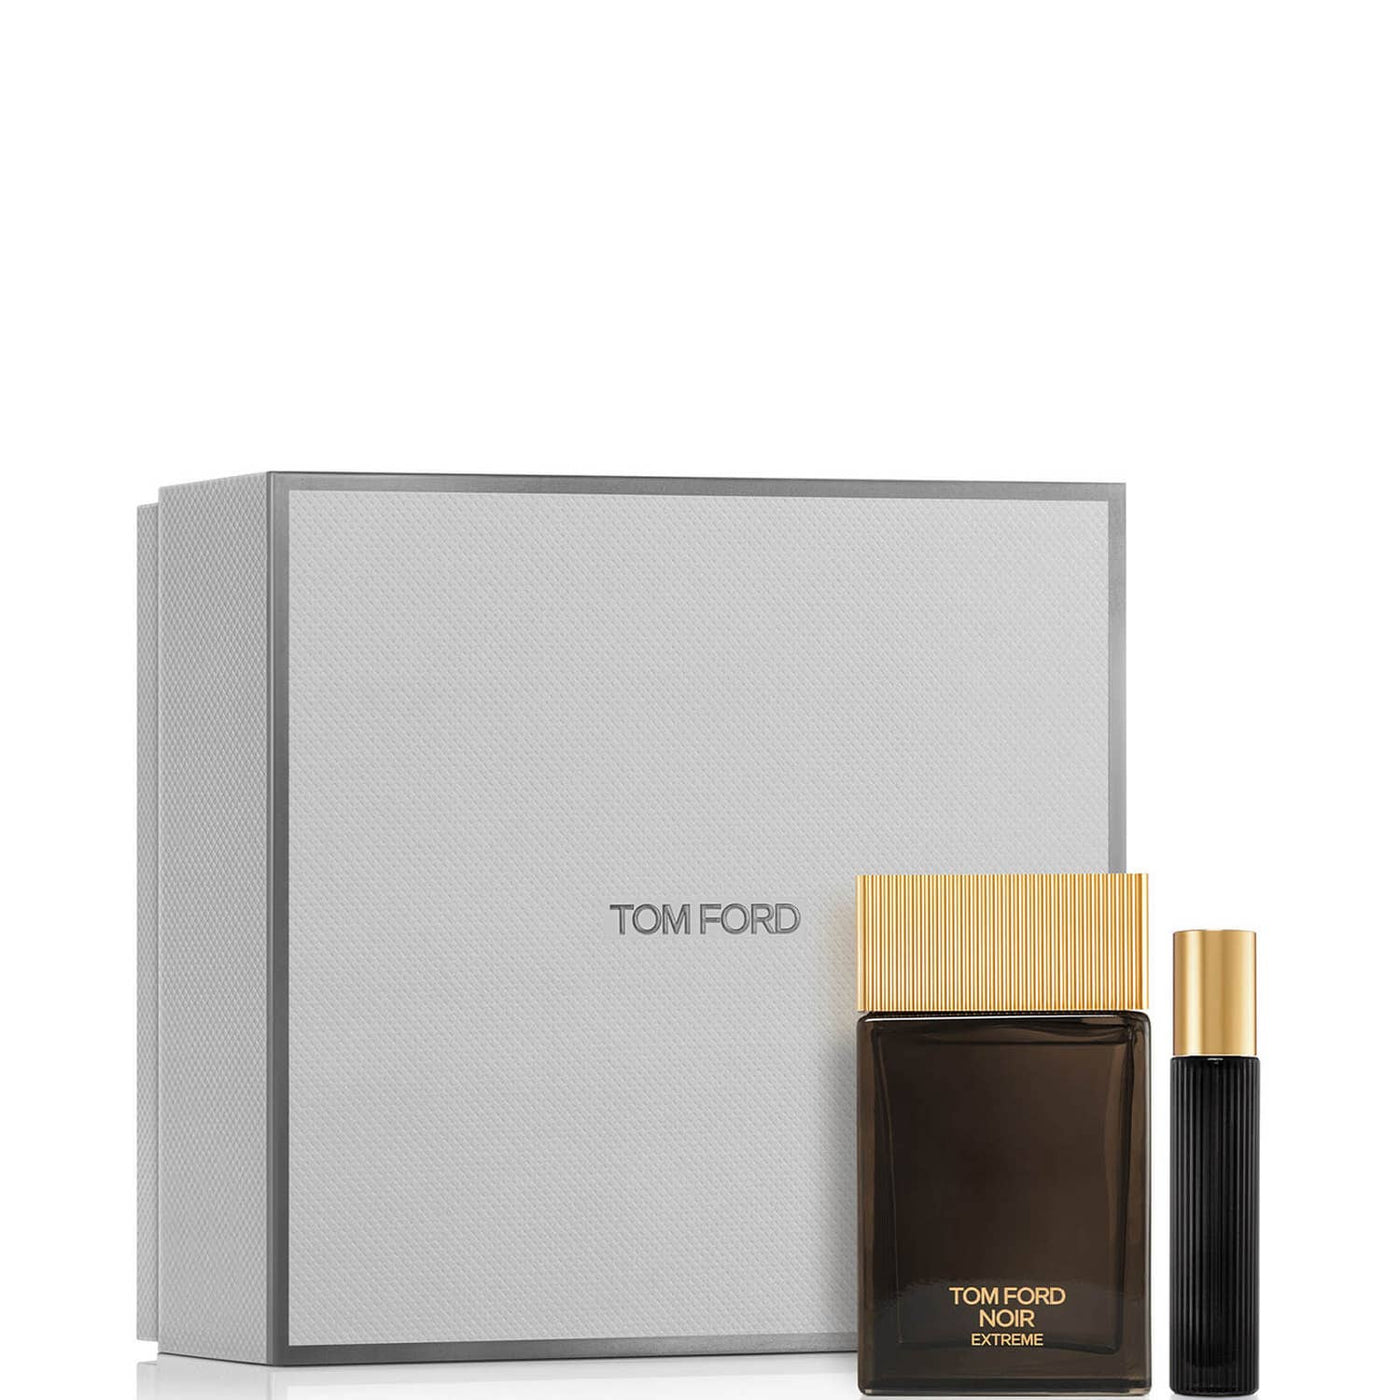 Tom Ford Noir Extreme For Men Set Eau De Parfum 100Ml + Eau De Parfum 10Ml Travel Spray